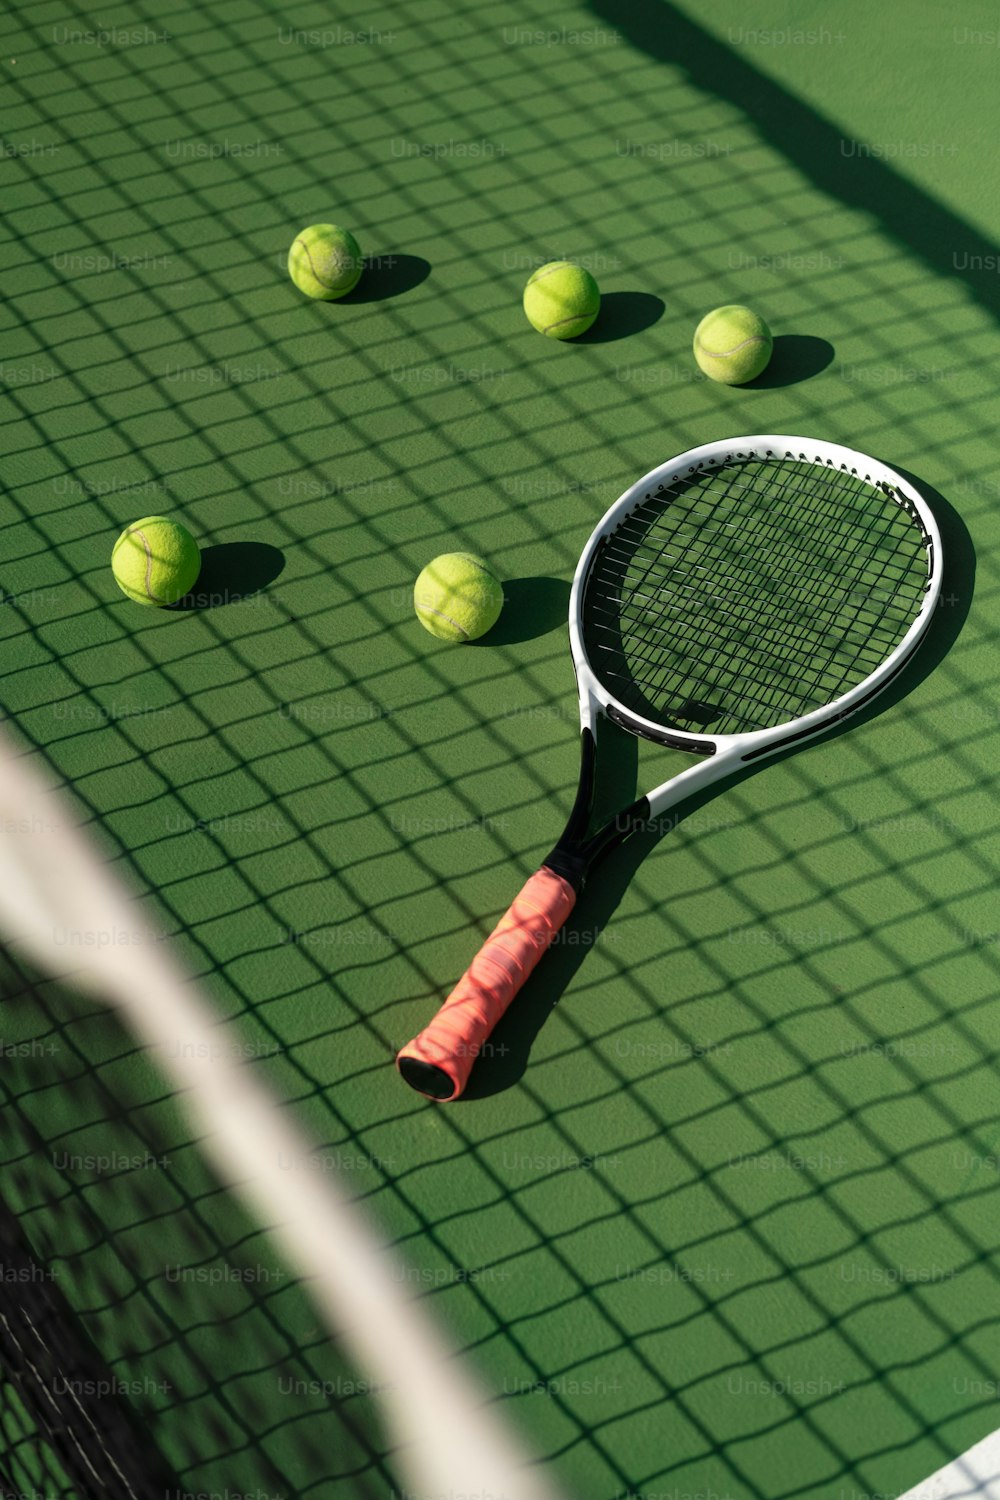 a tennis racket and balls on a tennis court